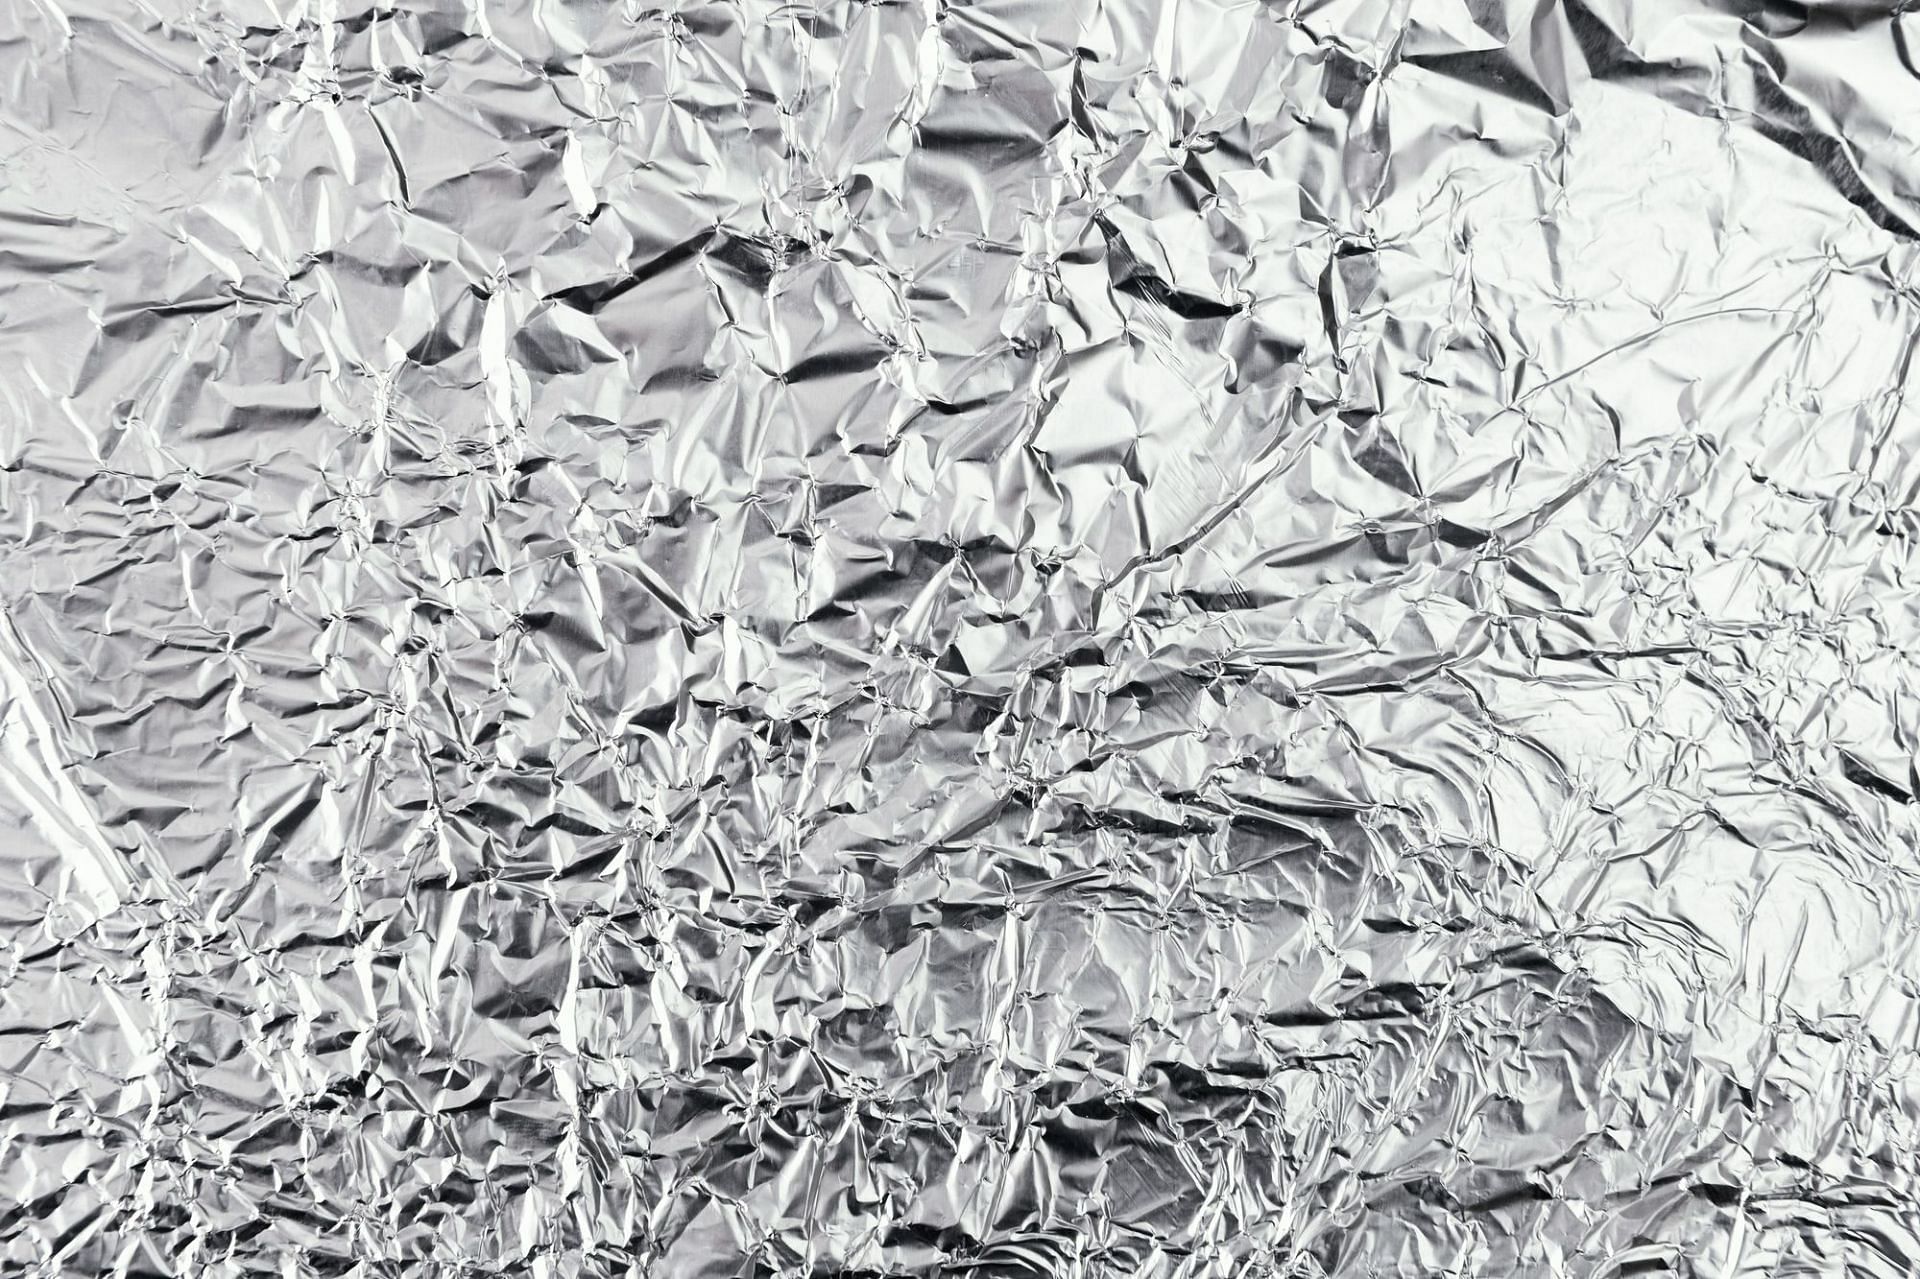 Aluminium Foil (Image by Freepik on Freepik)